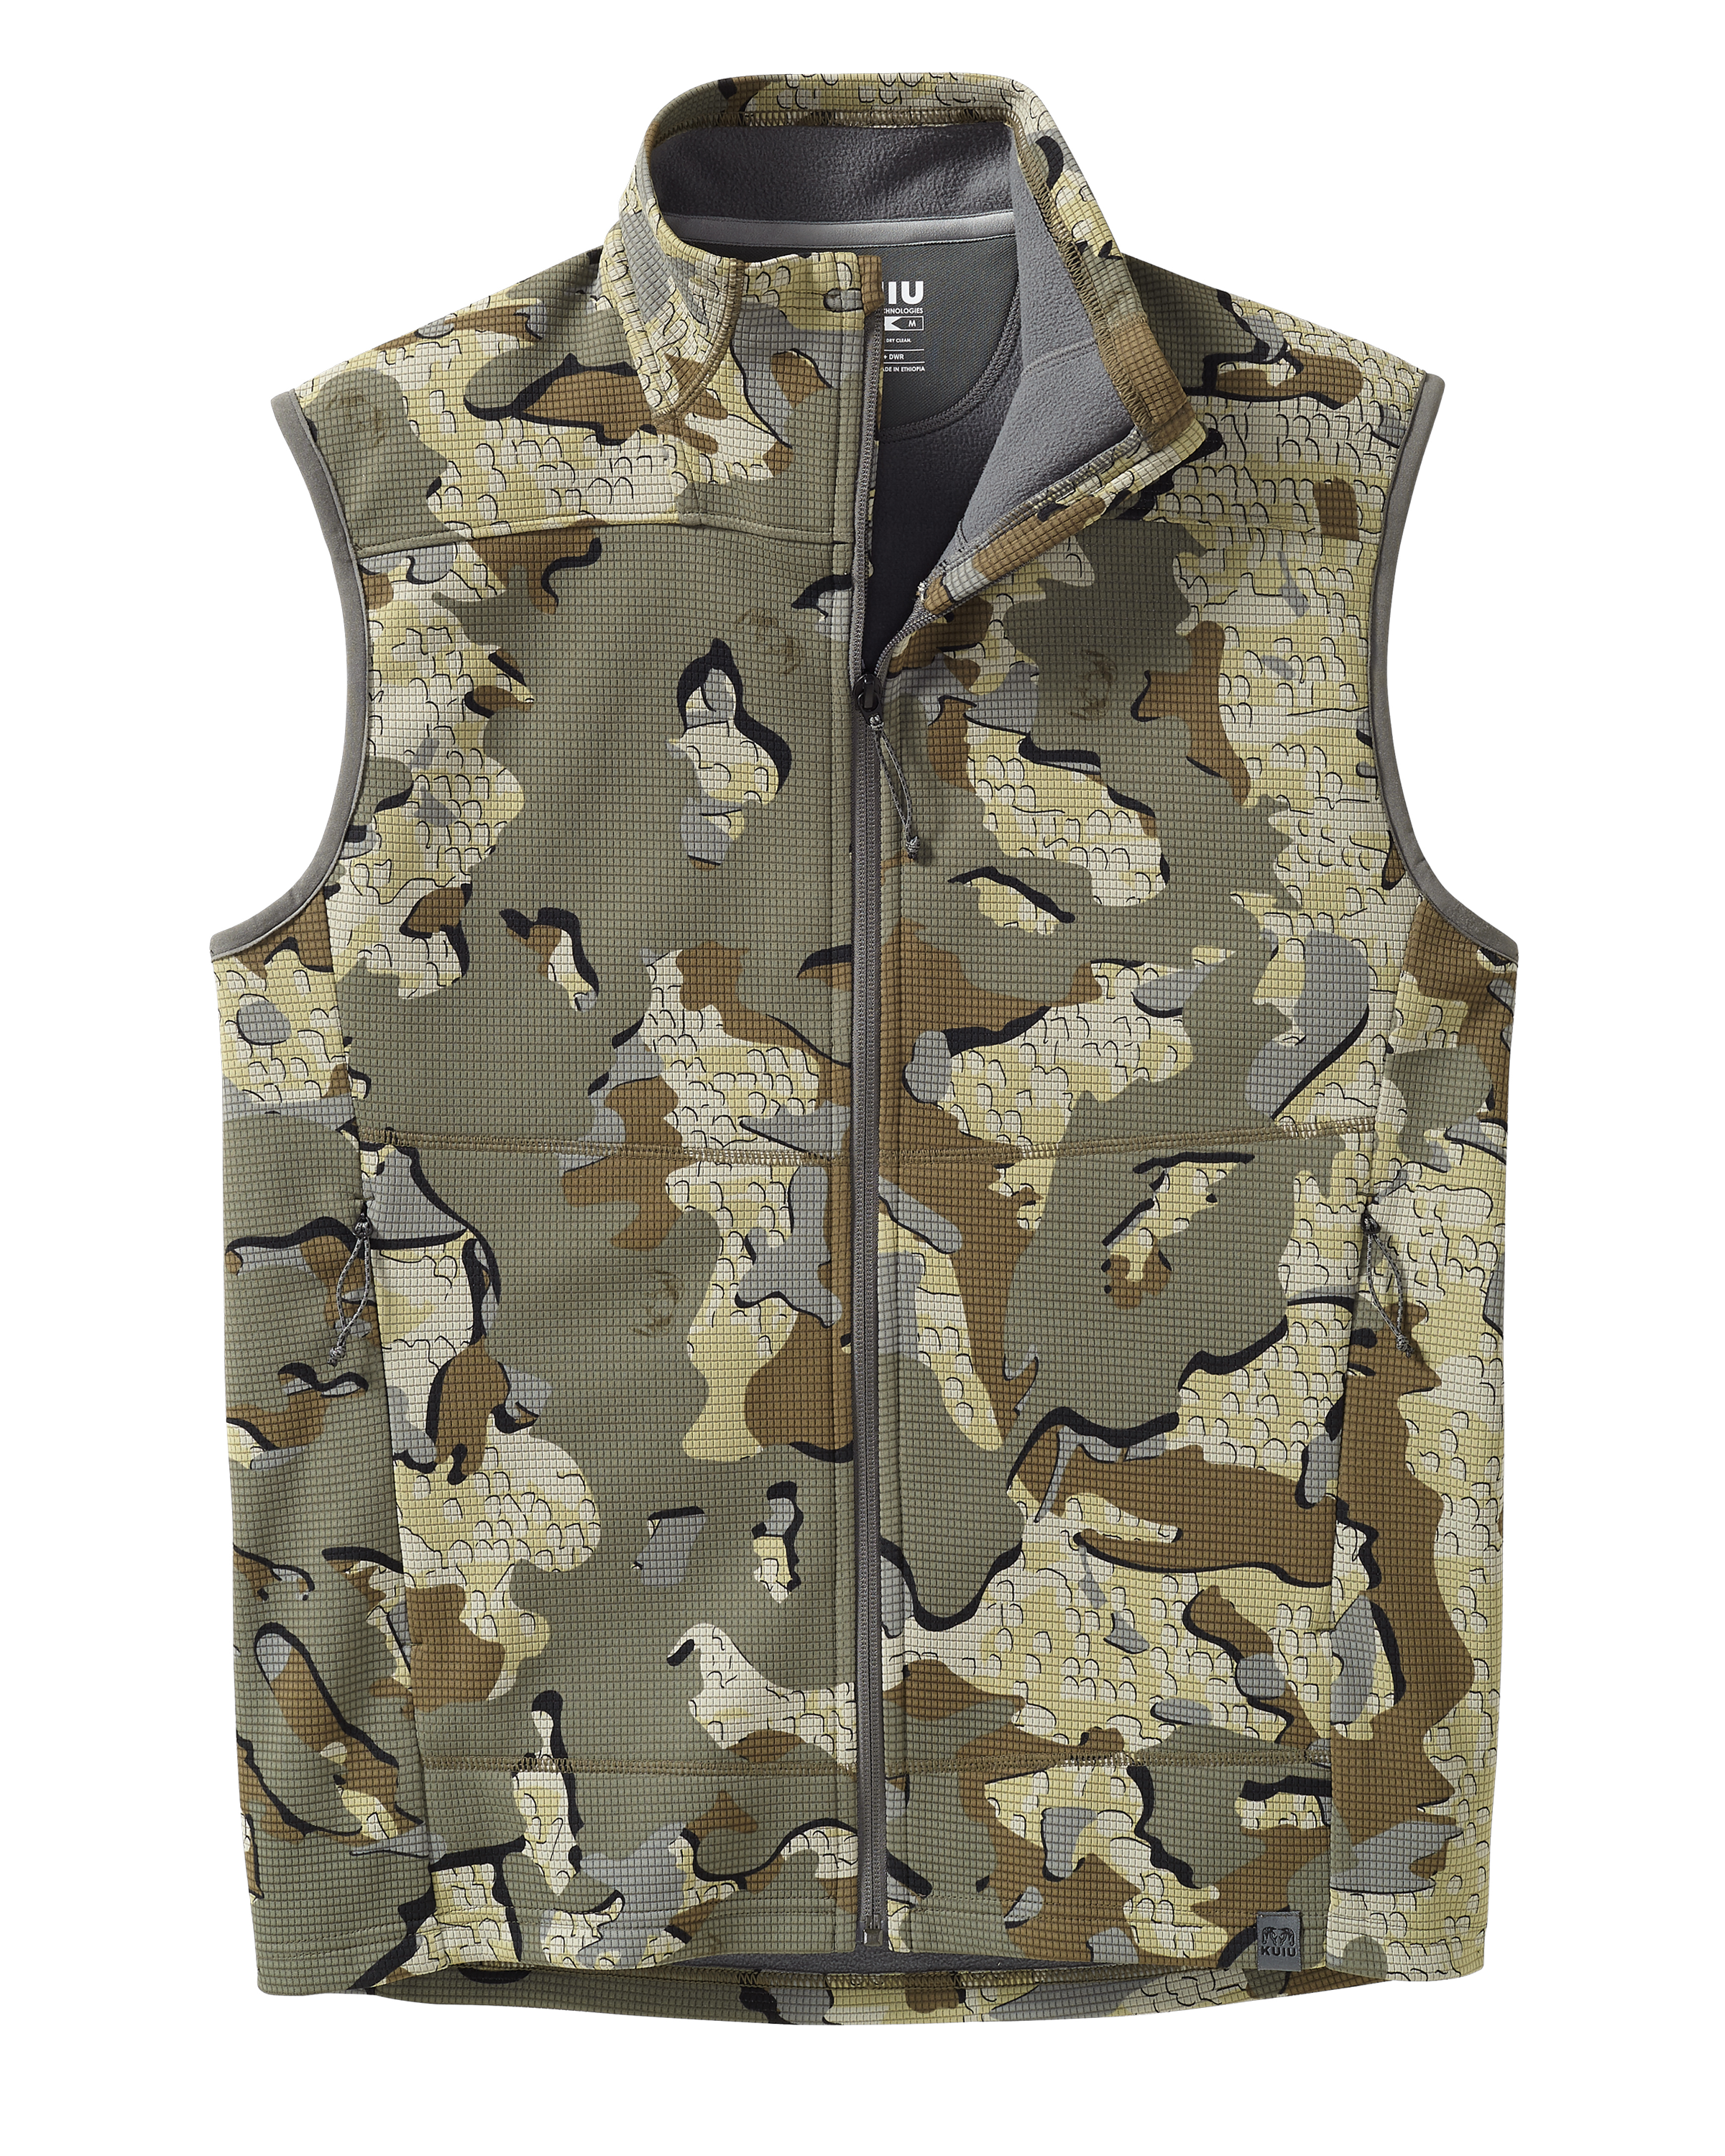 KUIU Peloton 240 Hunting Vest in Valo | Size Medium